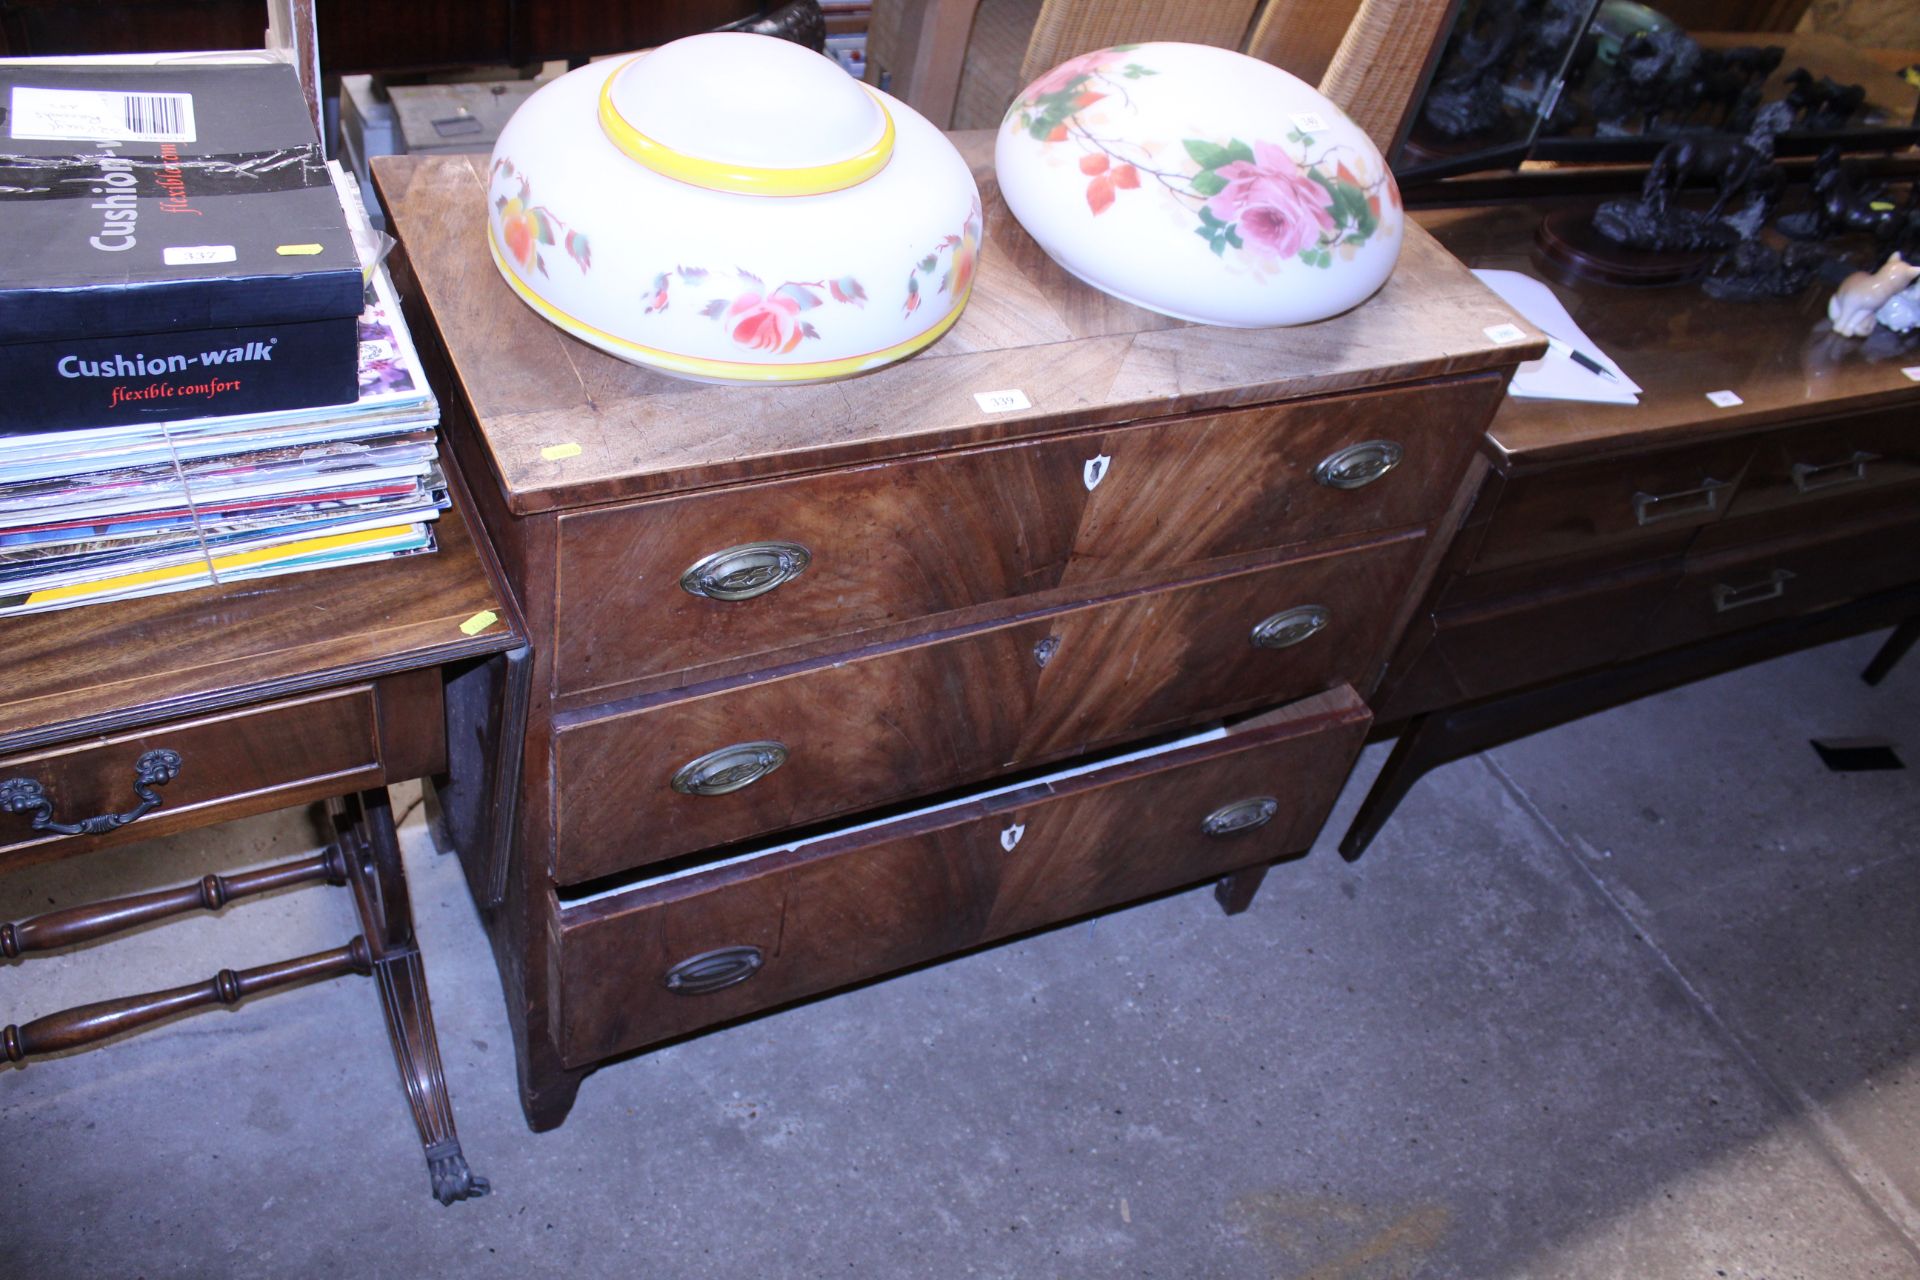 A 19th Century mahogany chest of three drawers